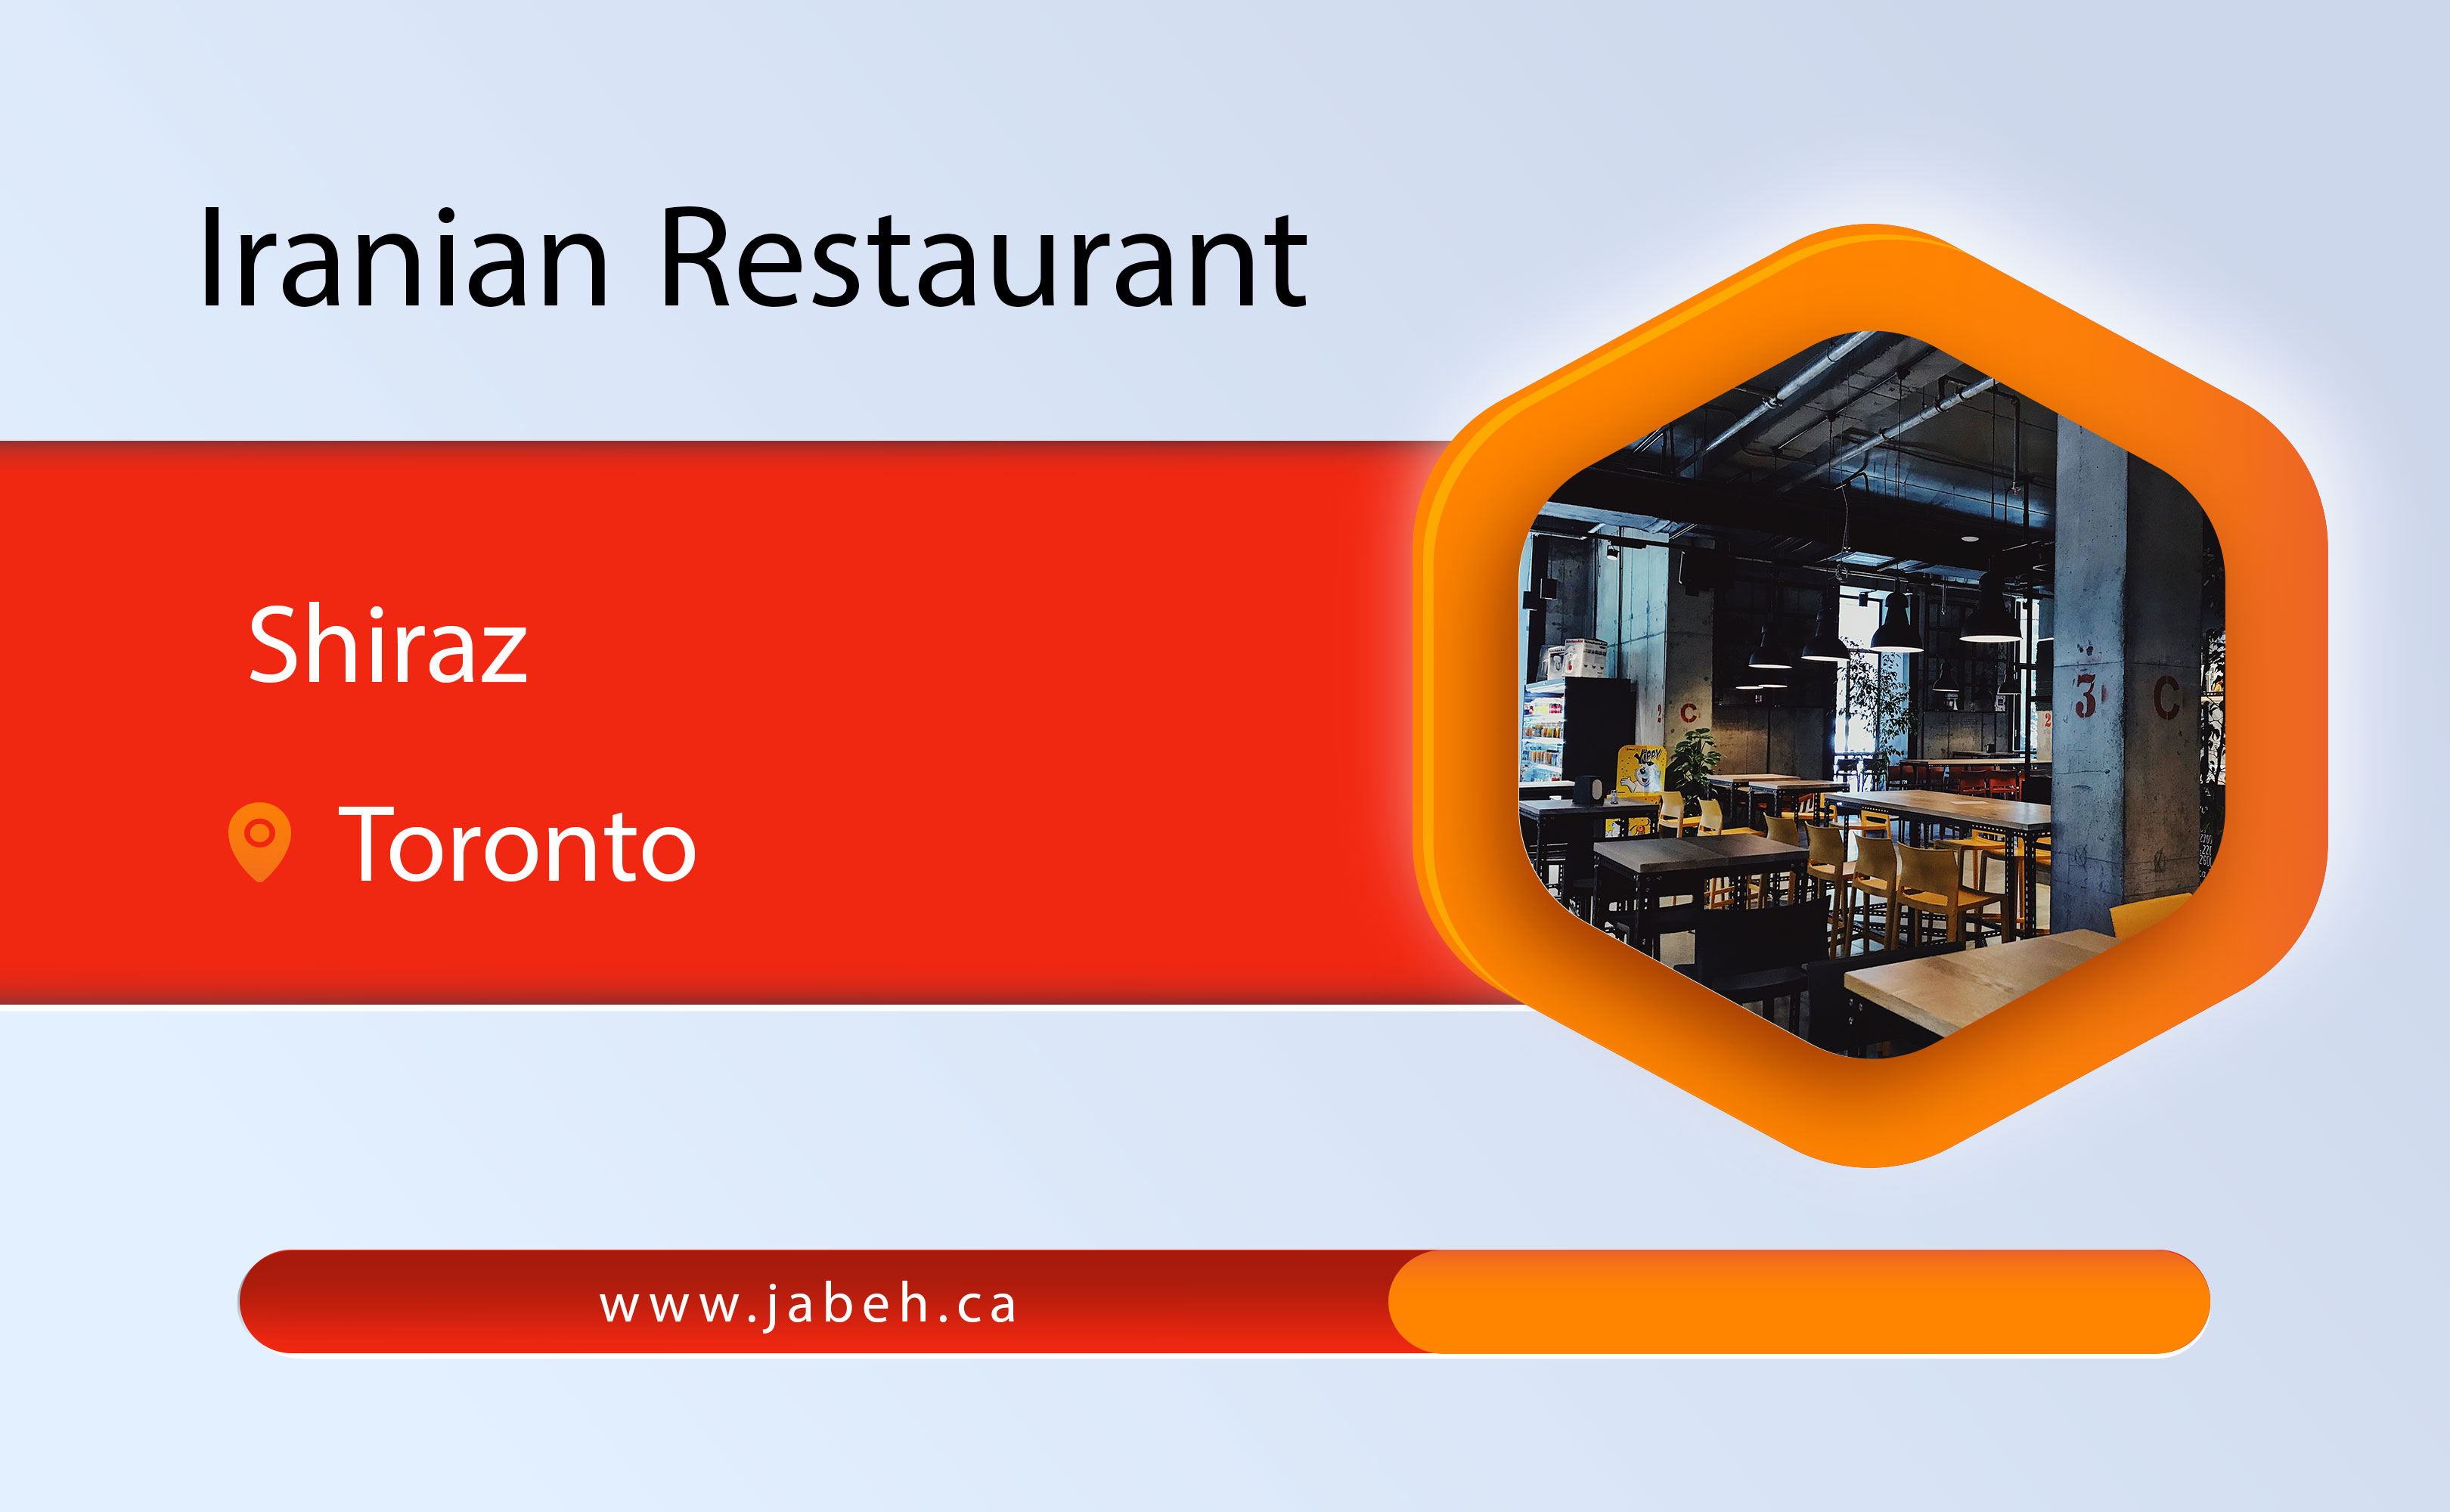 Shiraz Iranian restaurant in Toronto